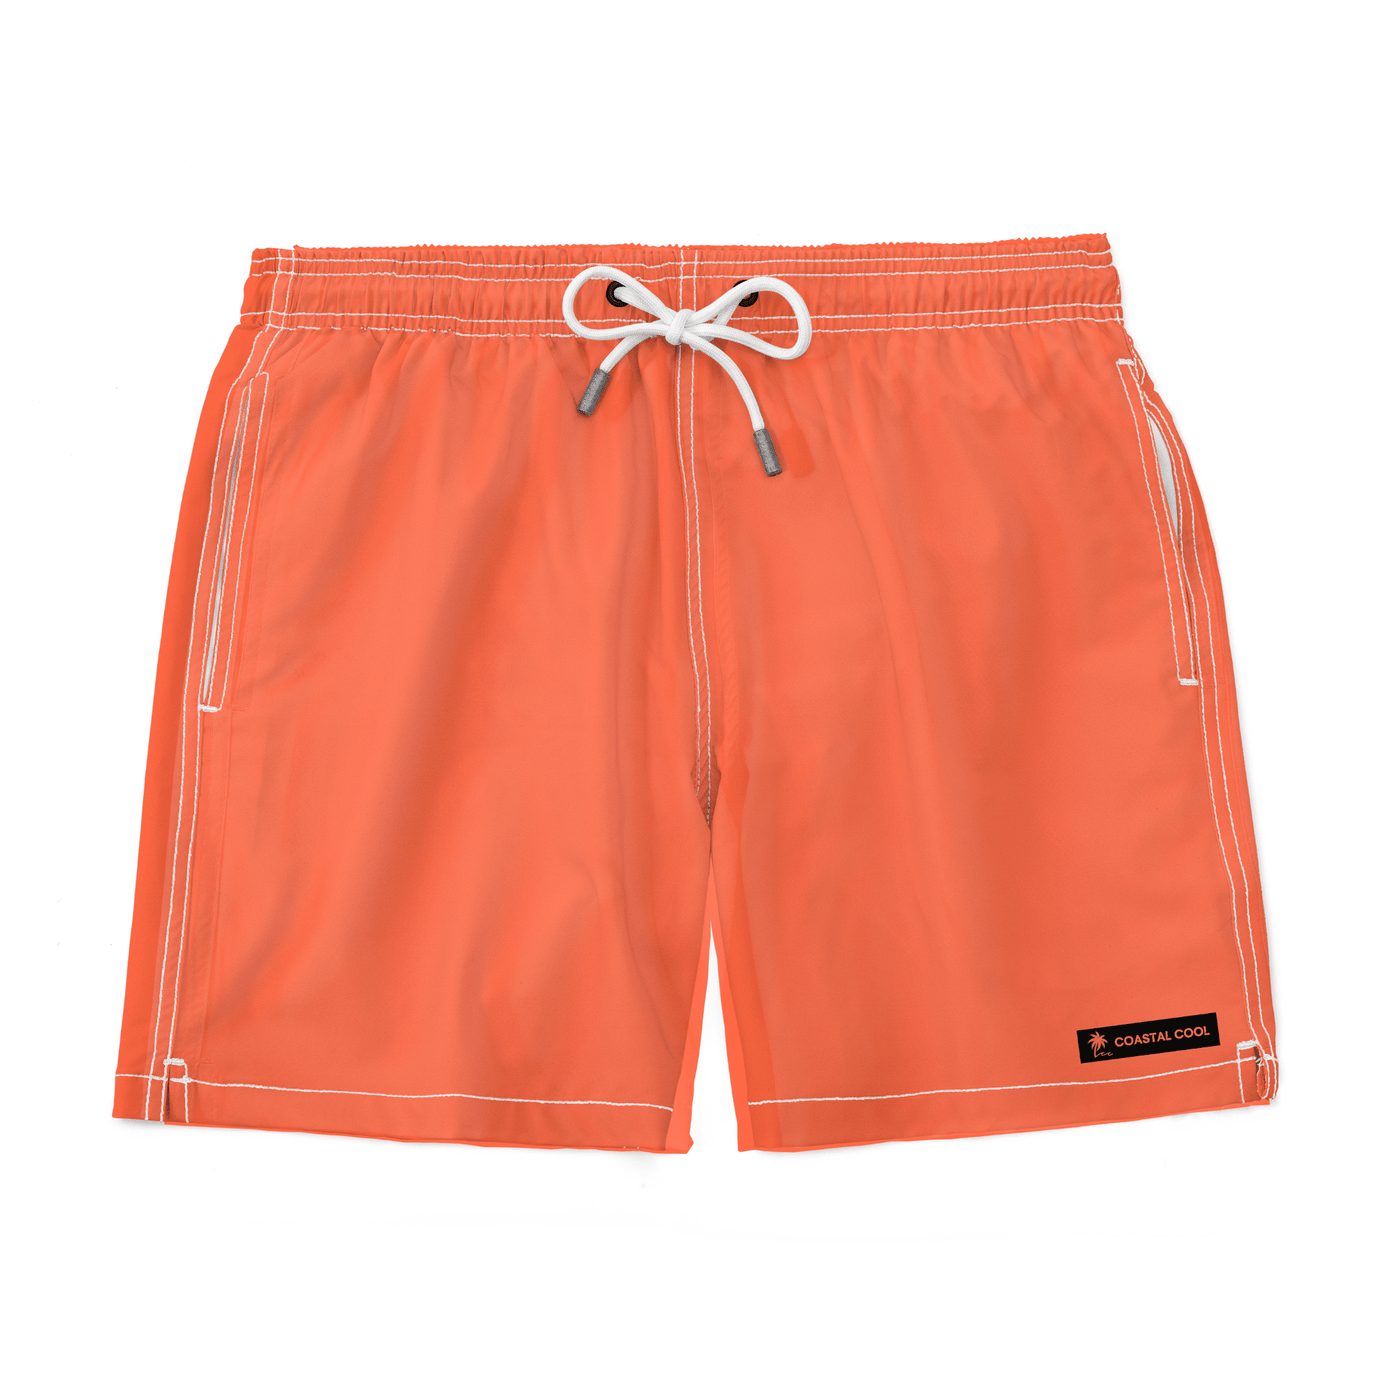 Orange Solid Swim Trunks - Coastal Cool - Swimwear and Beachwear - Recycled fabrics